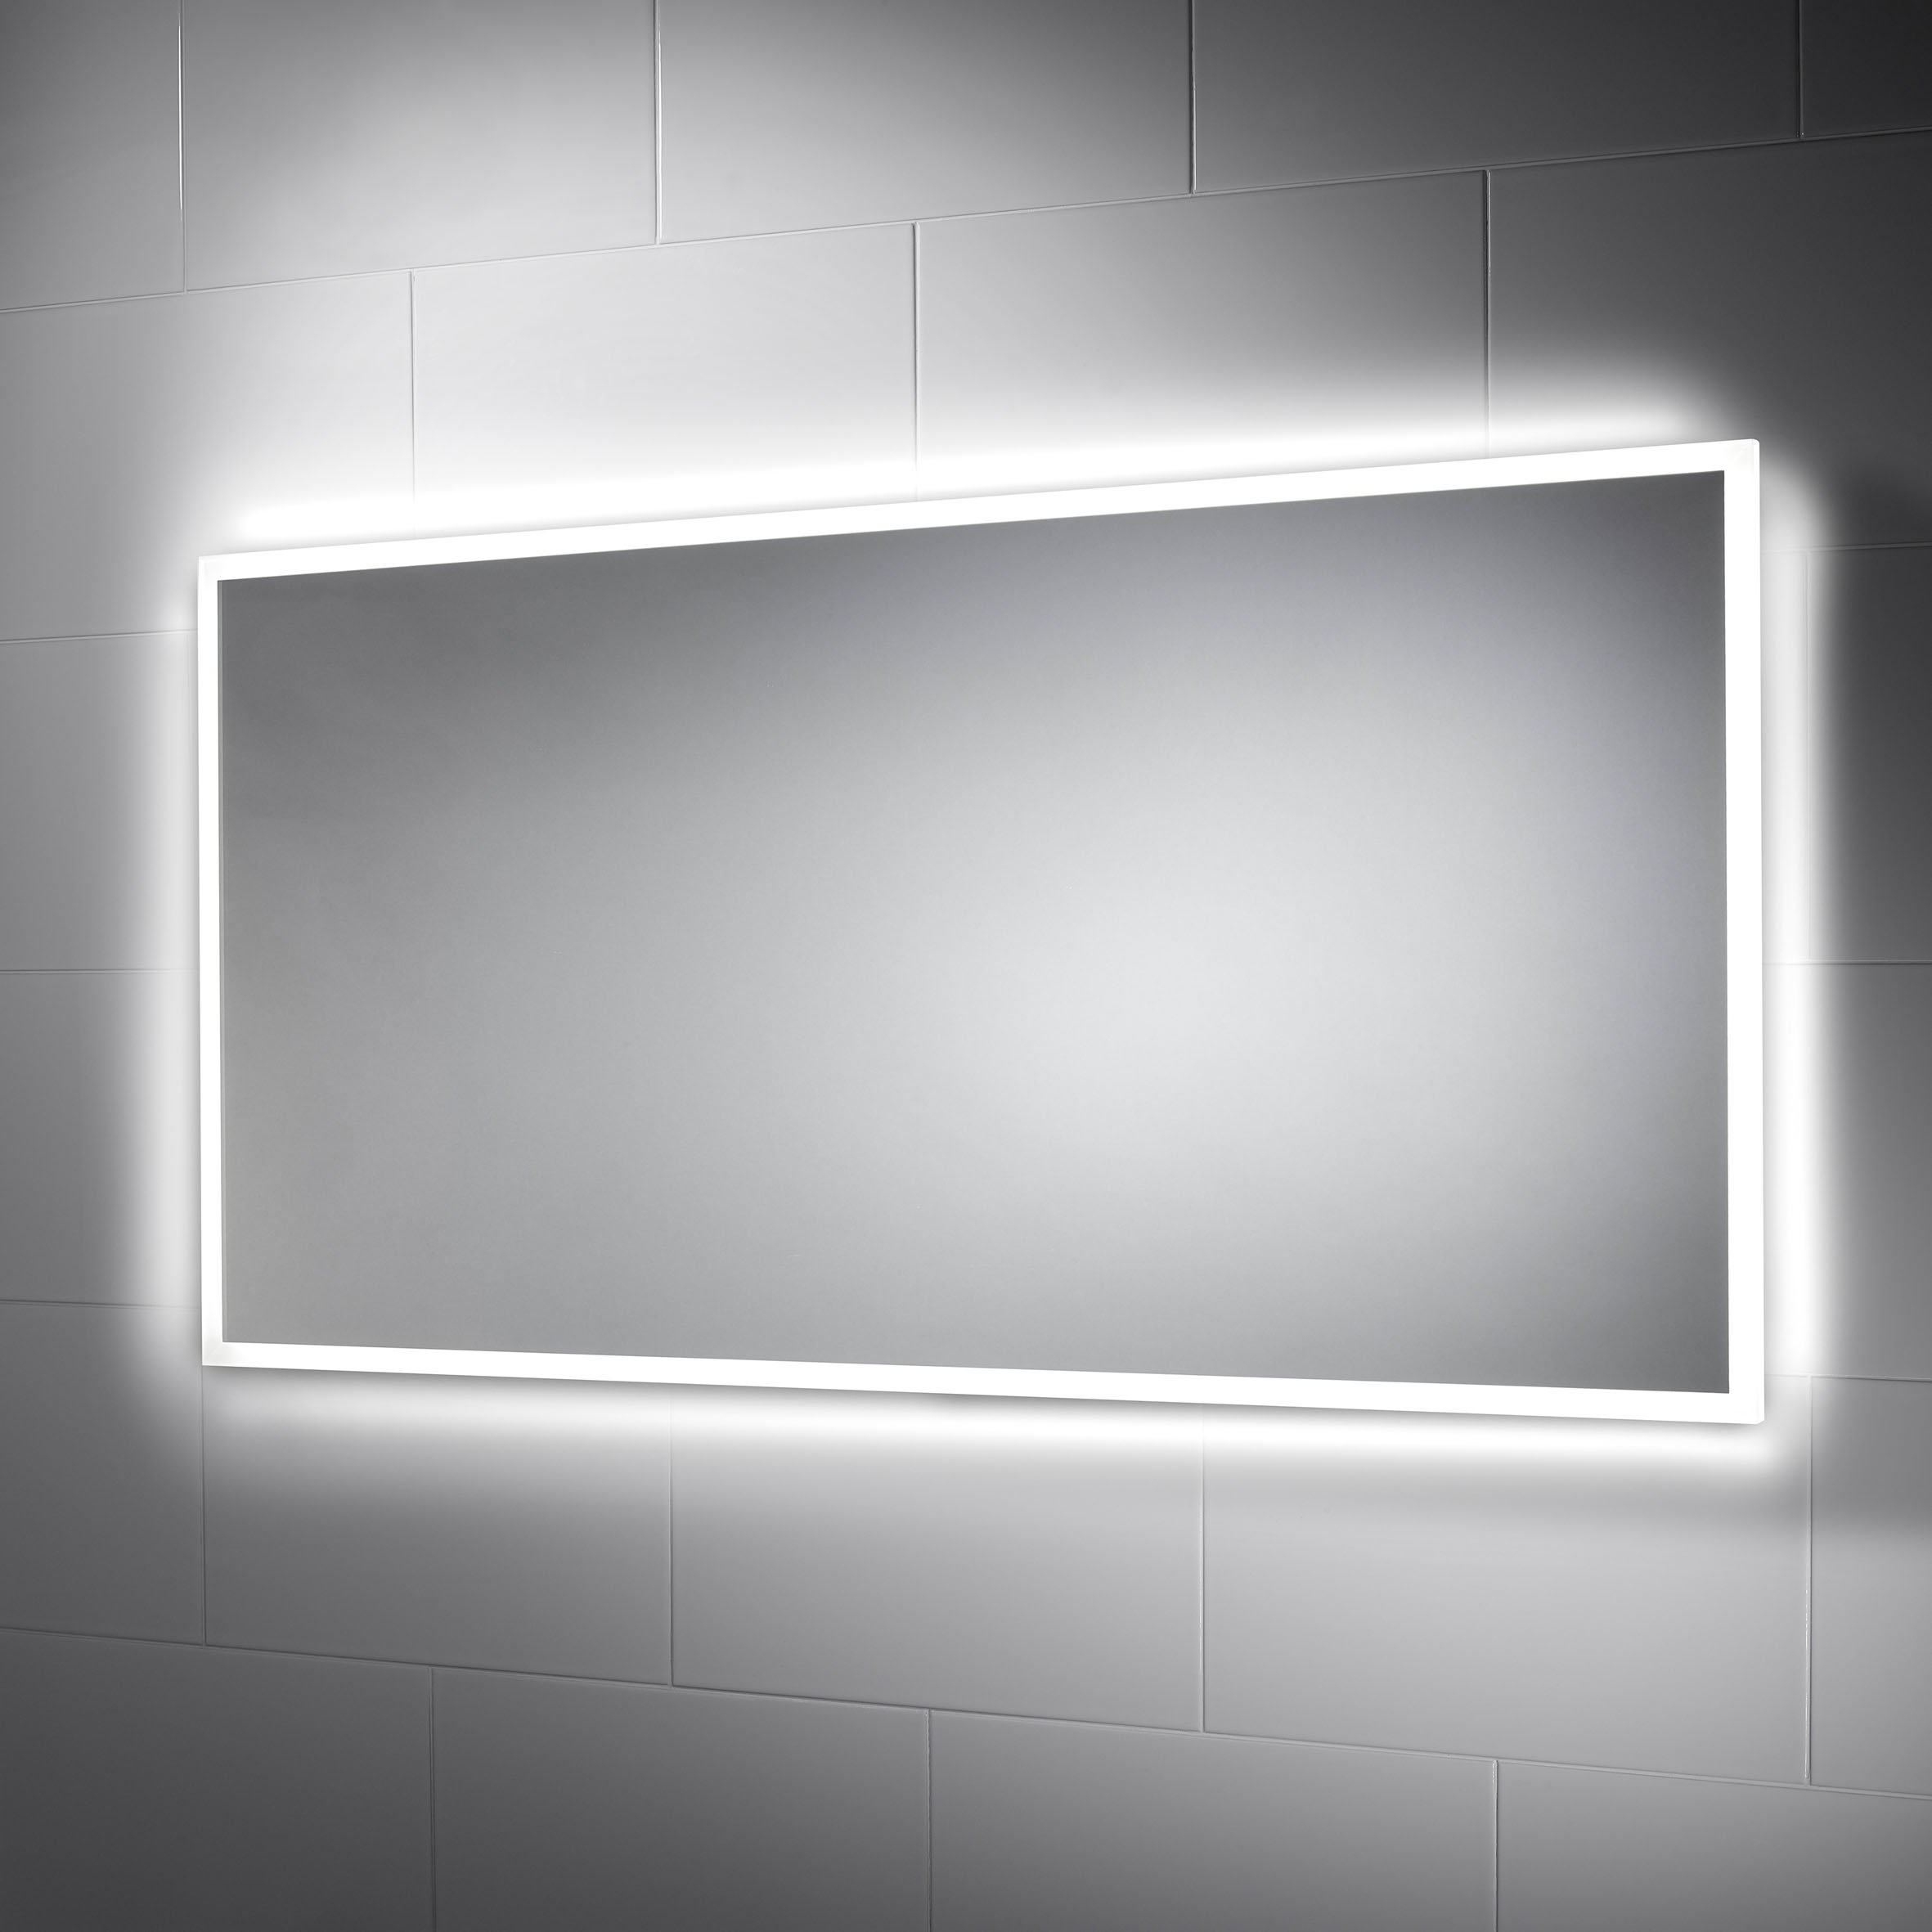 5 Benefits of an LED Bathroom Mirror